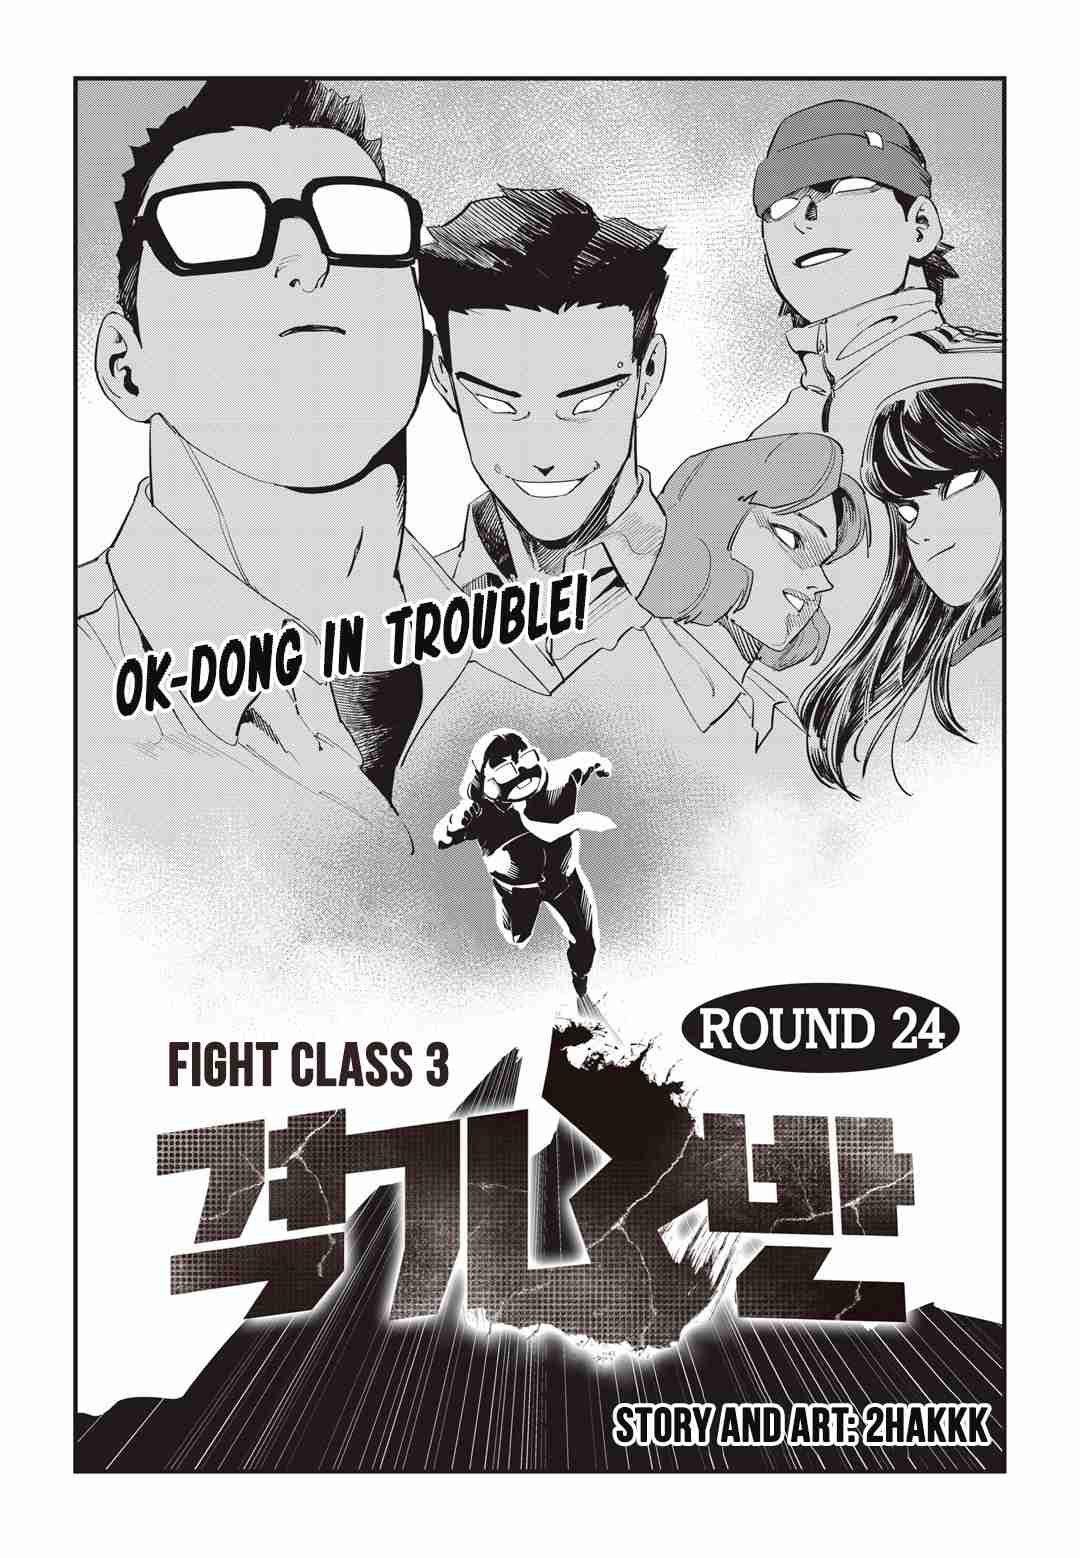 Fight Class 3 Vol. 4 Ch. 24 Round 24